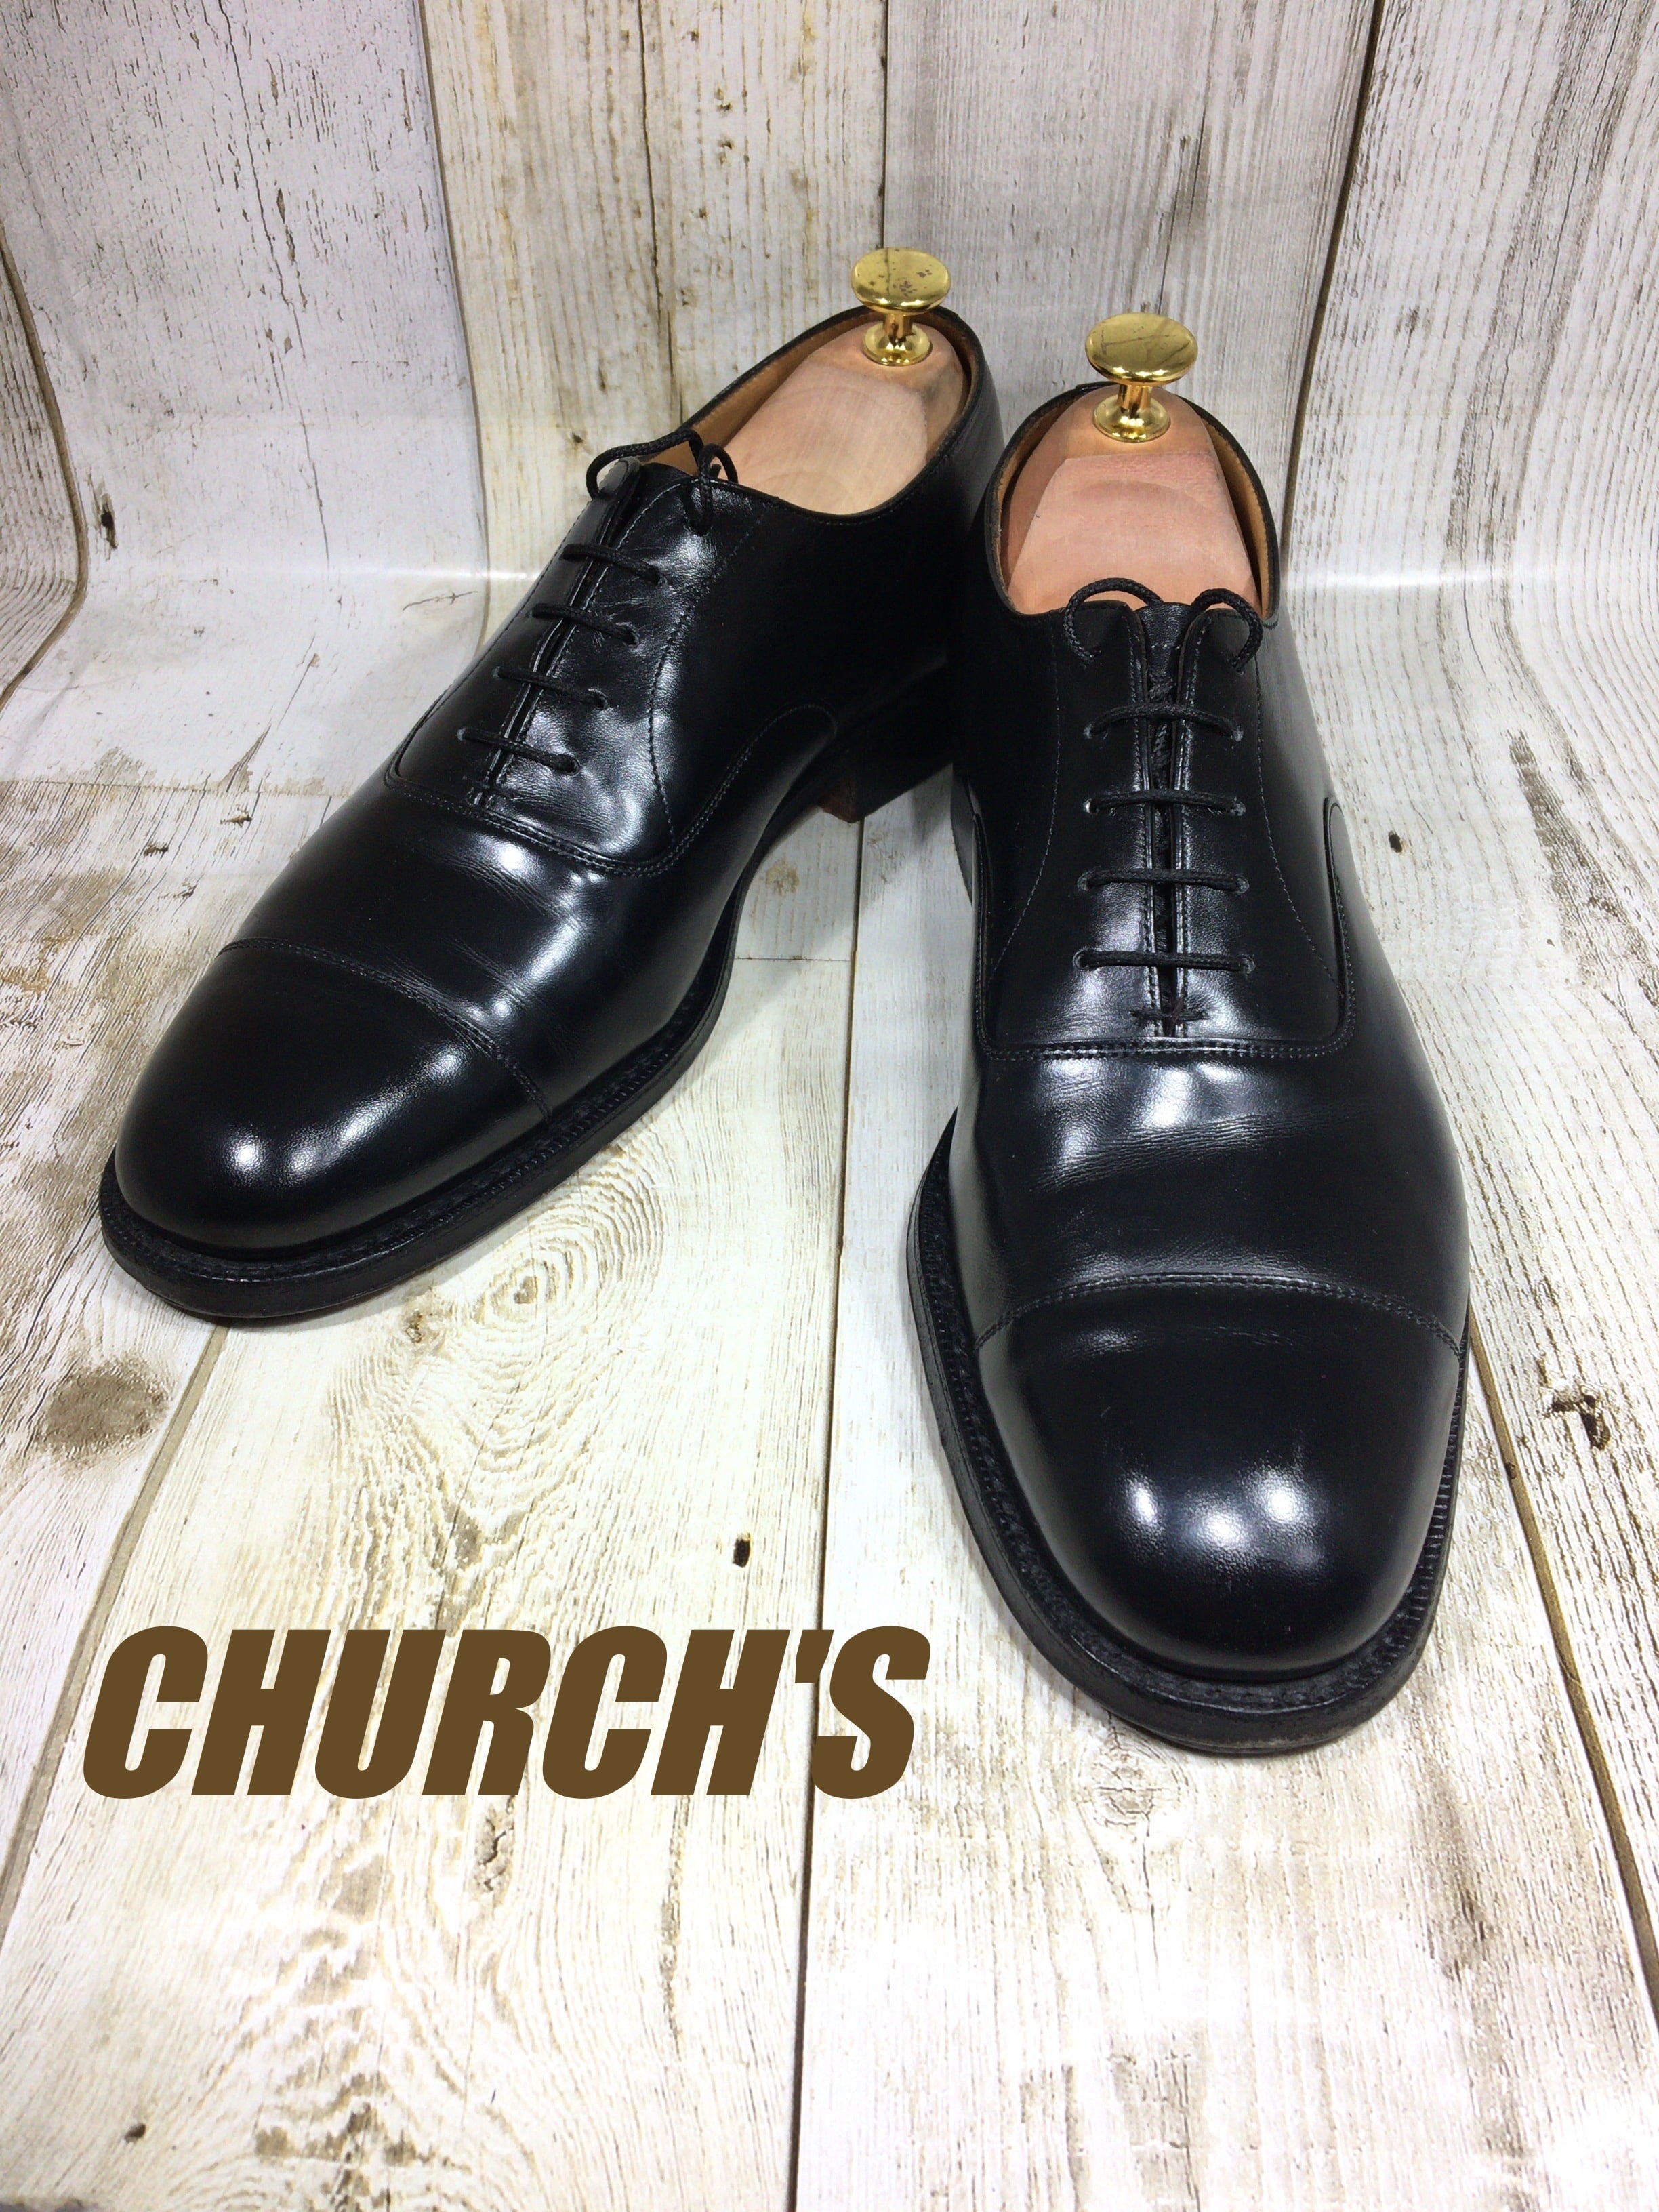 Church's チャーチ ストレートチップ コンサル UK7 25.5cm | 中古靴・革靴・ブーツ通販専門店 DafsMart ダフスマート  Online Shop powered by BASE